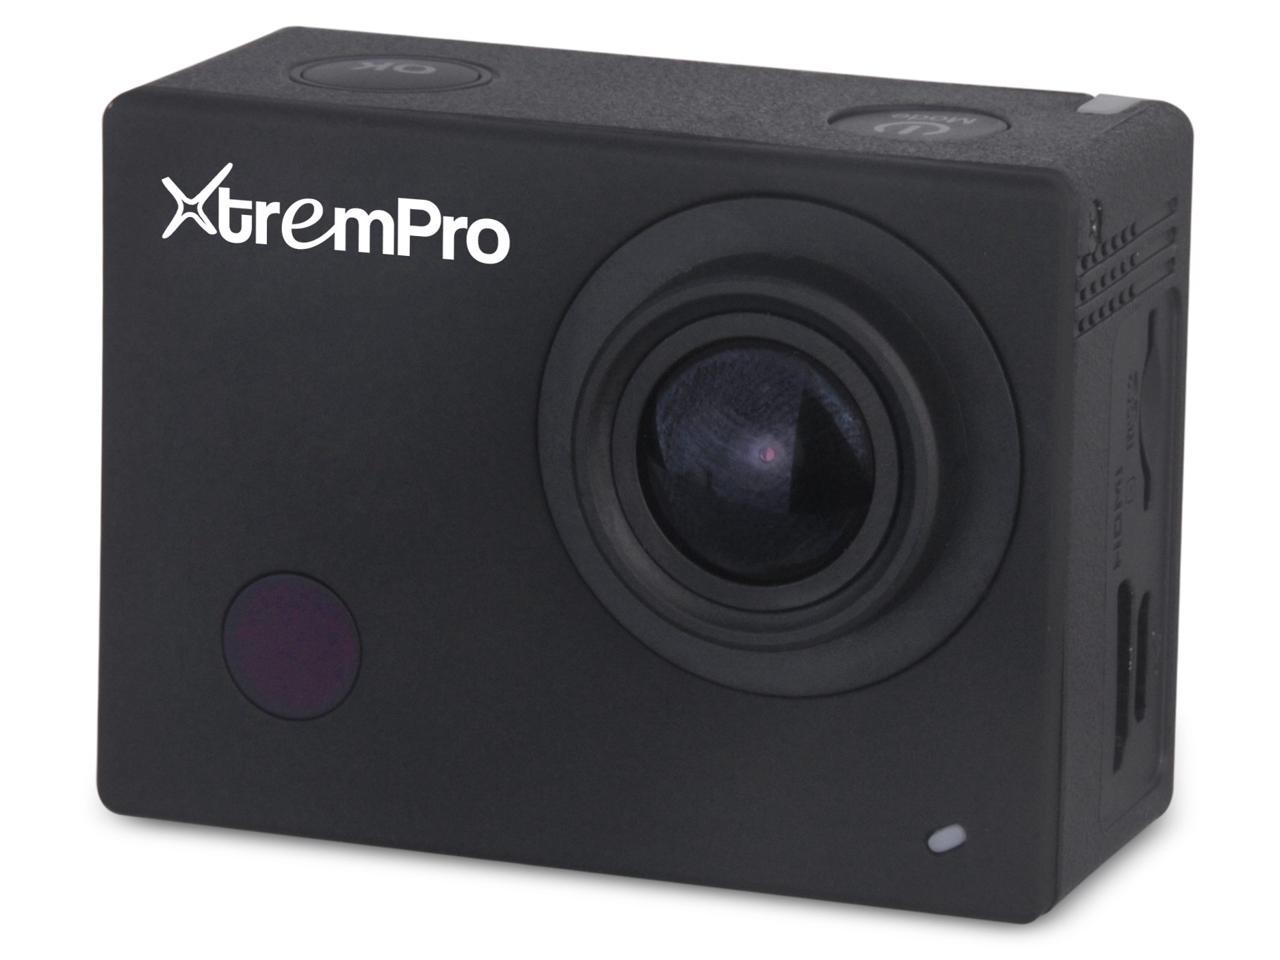 XtremPro Sports Action Video Camera Waterproof WIFI Full HD 1080P DV Camcorder 12MP MINI Digital Video w/ 2.0